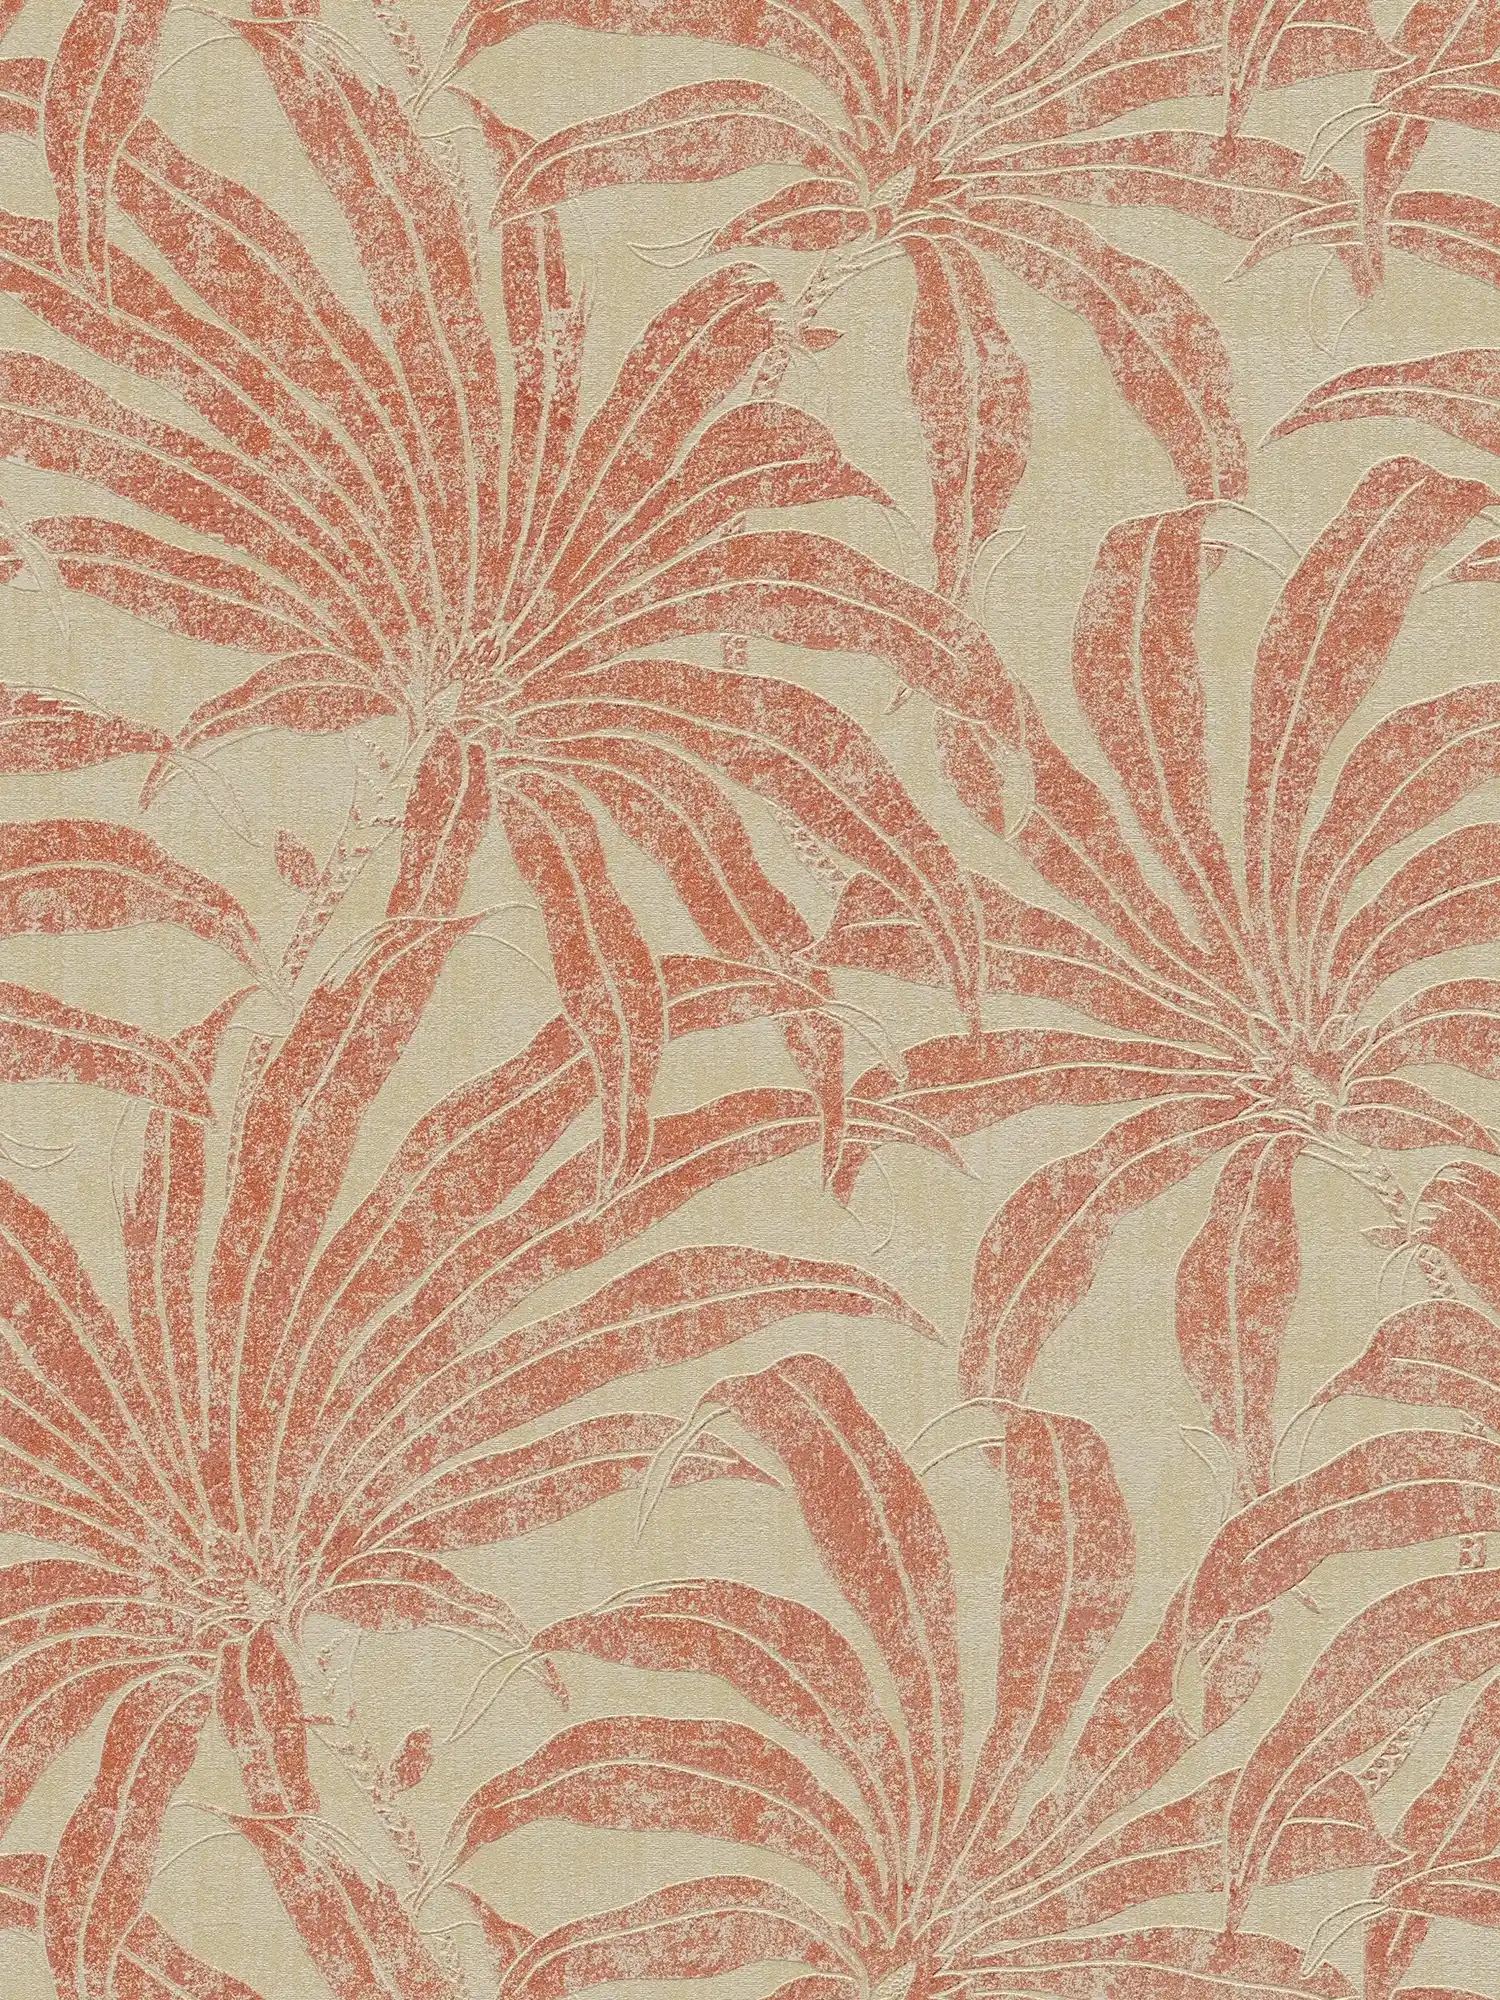 Floral pattern wallpaper with jungle blossom - beige, red, orange
